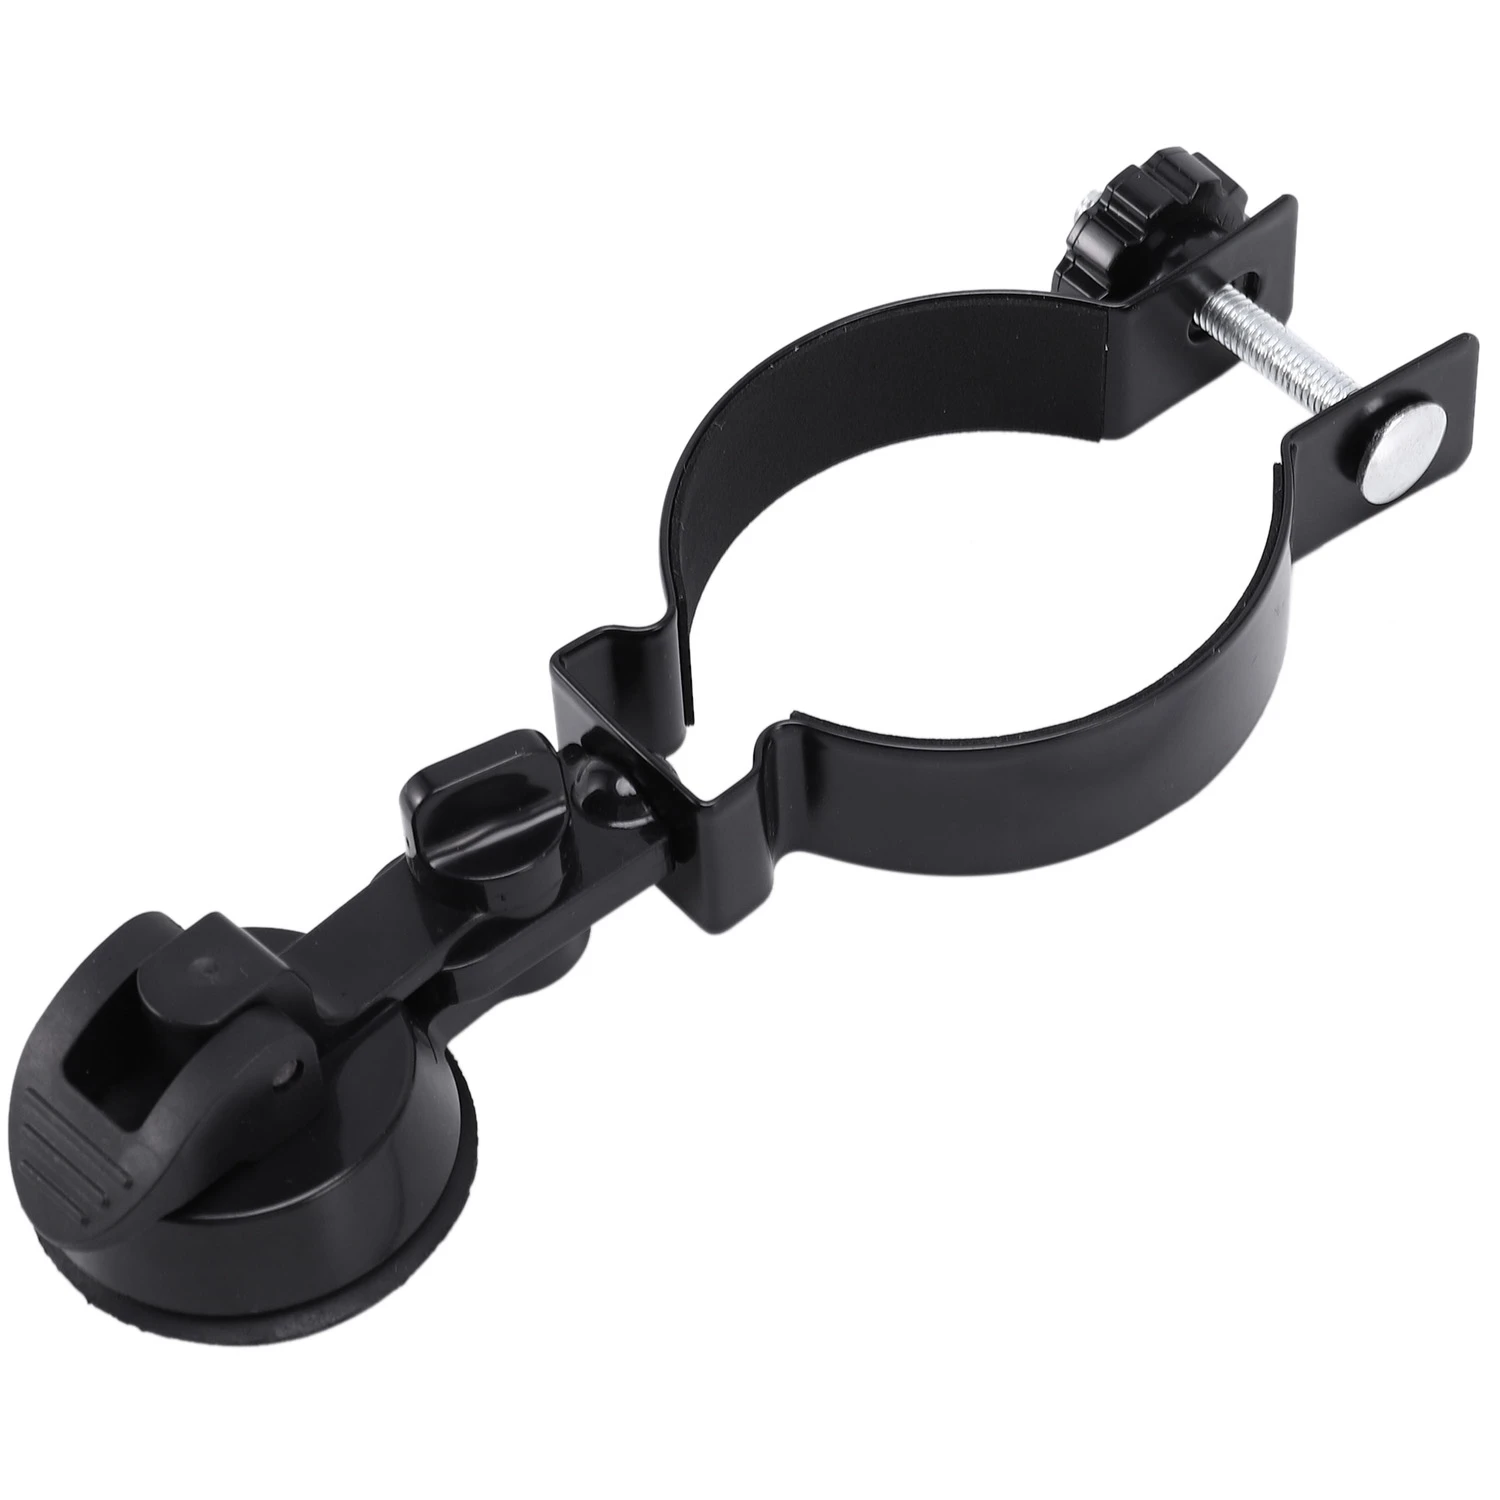 

Adapter Clip Binocular Monocular Spotting Scopes Universal Mobile Phone Camera Holder Stand